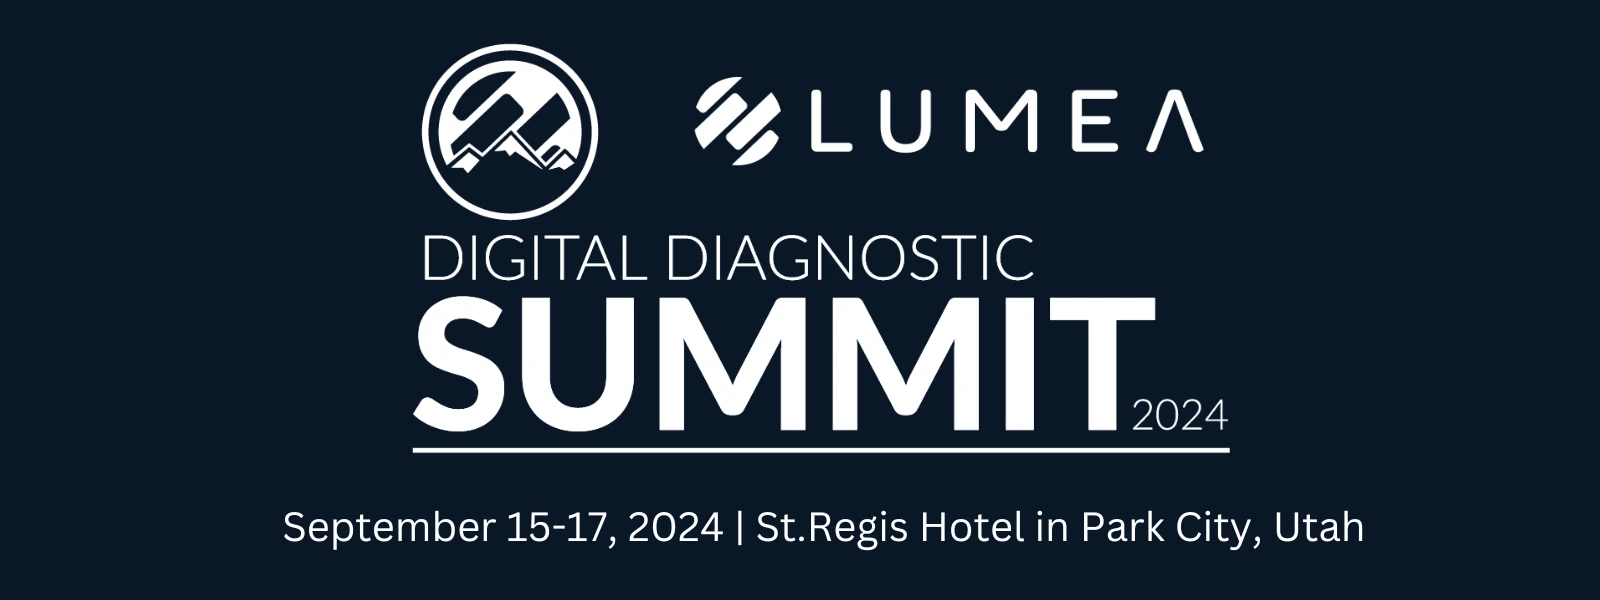 Digital Diagnostic Summit 2024